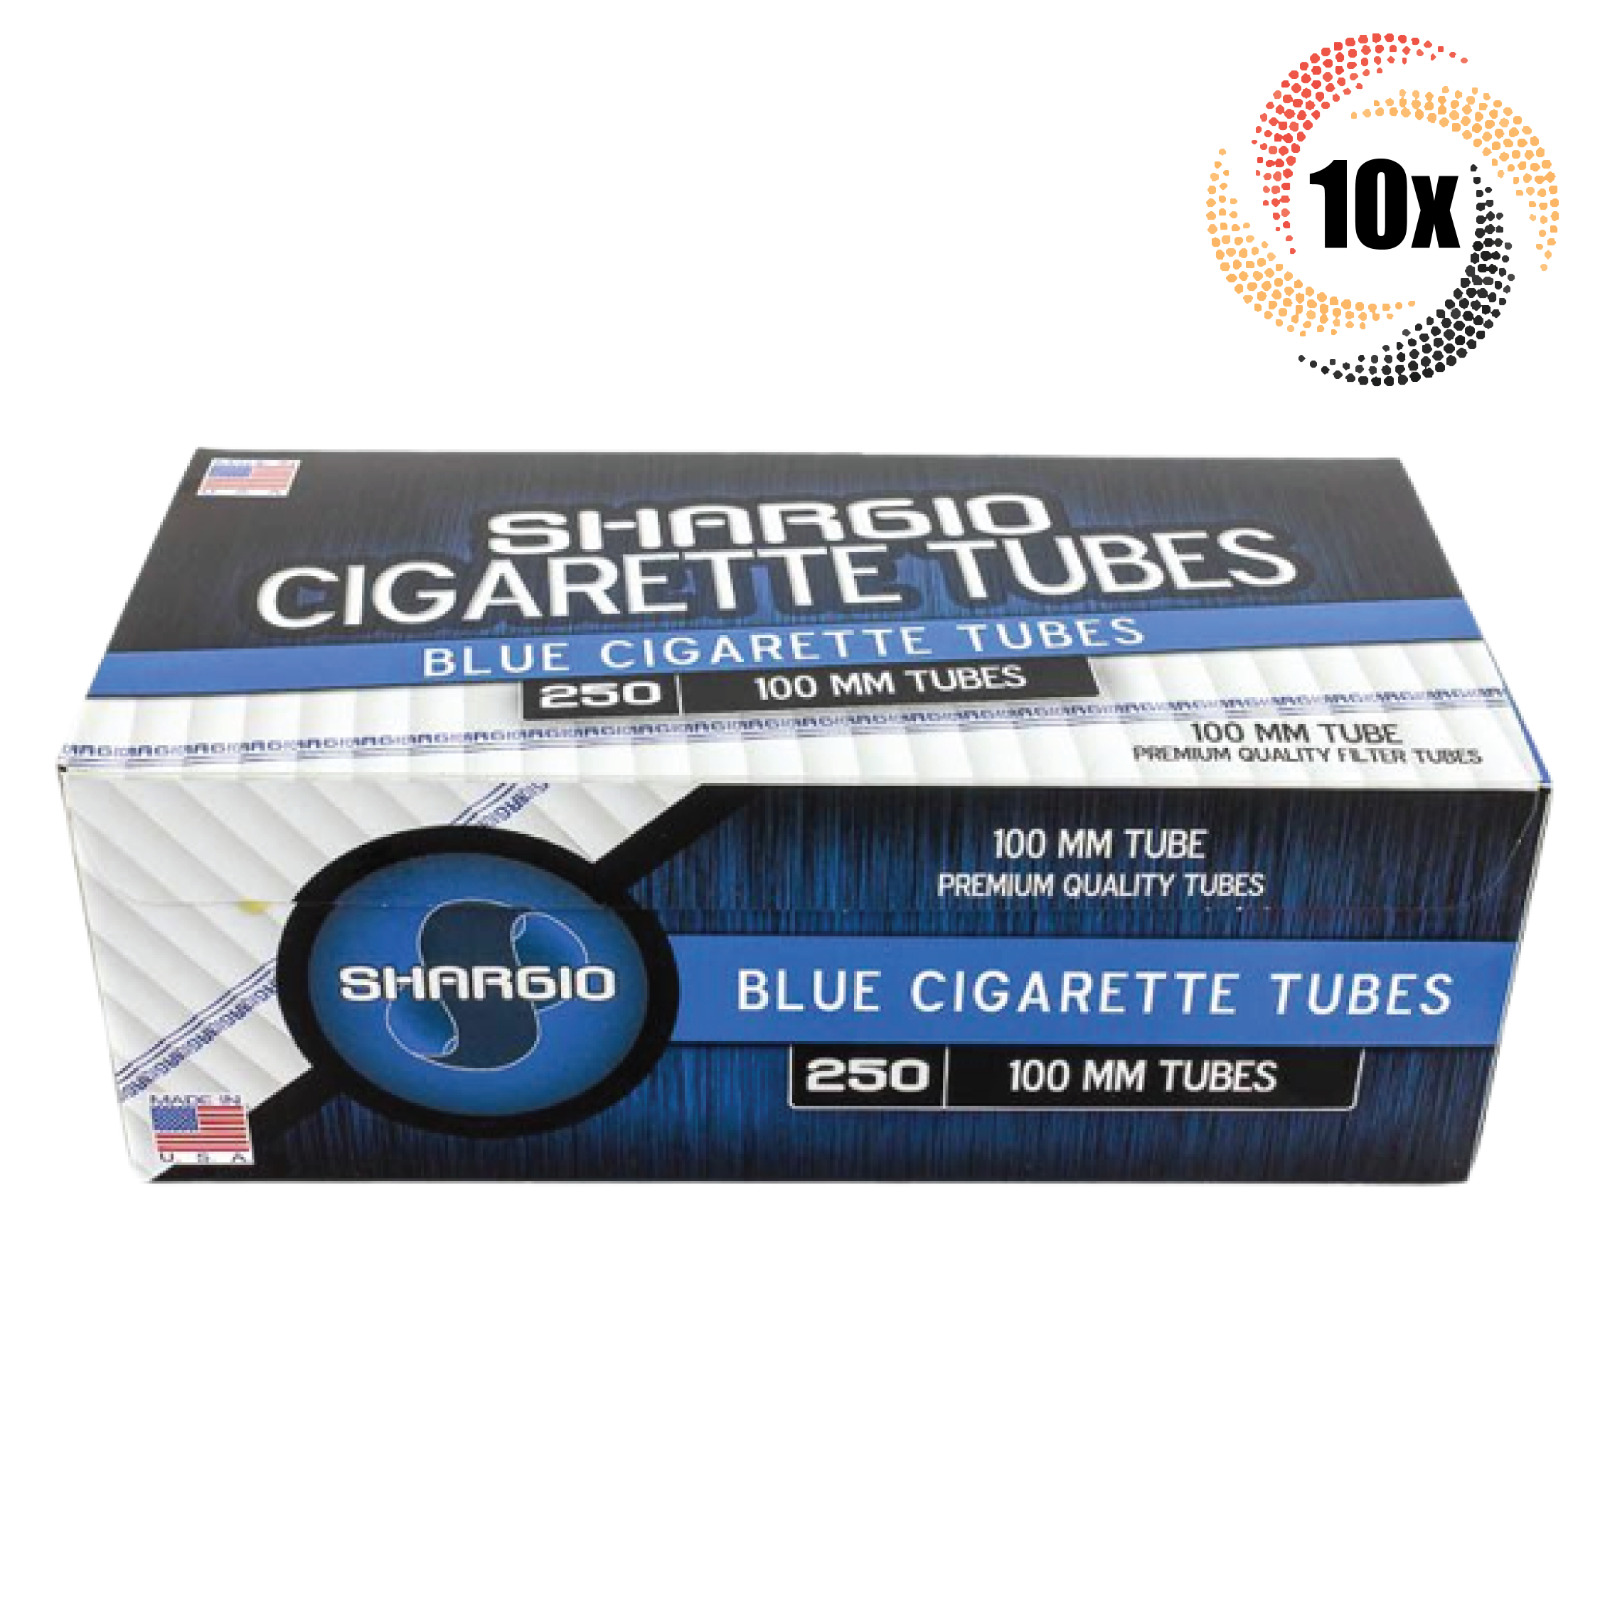 10x Boxes Shargio Blue Light 100MM 100's ( 2,500 Tubes ) Cigarette Tobacco RYO